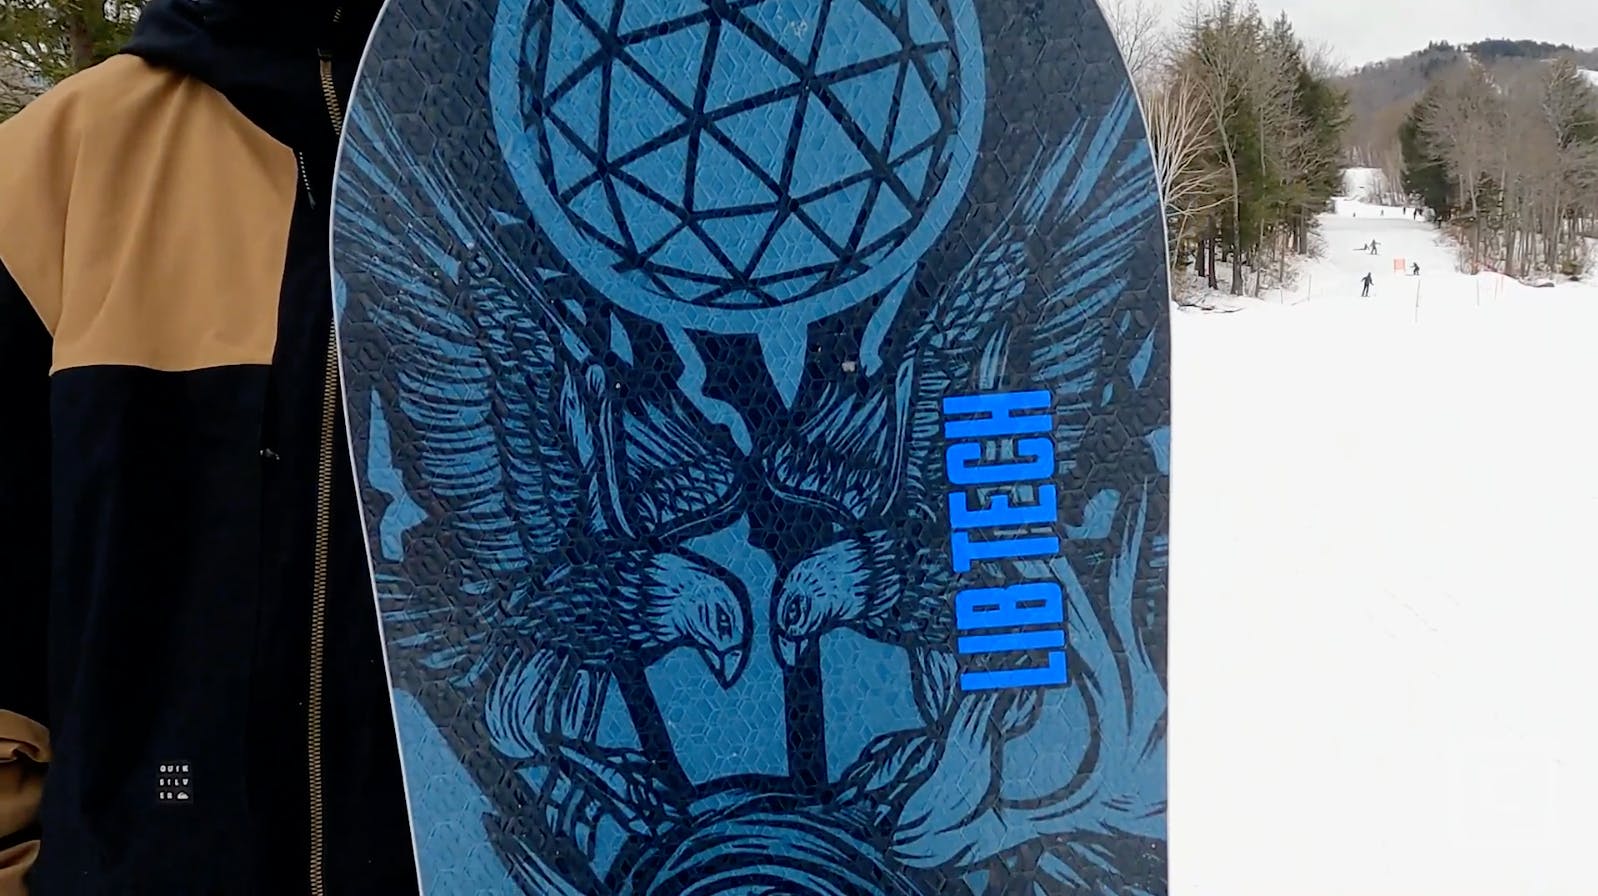 Closeup on the blue top graphics of the Lib Tech Terrain Wrecker snowboard